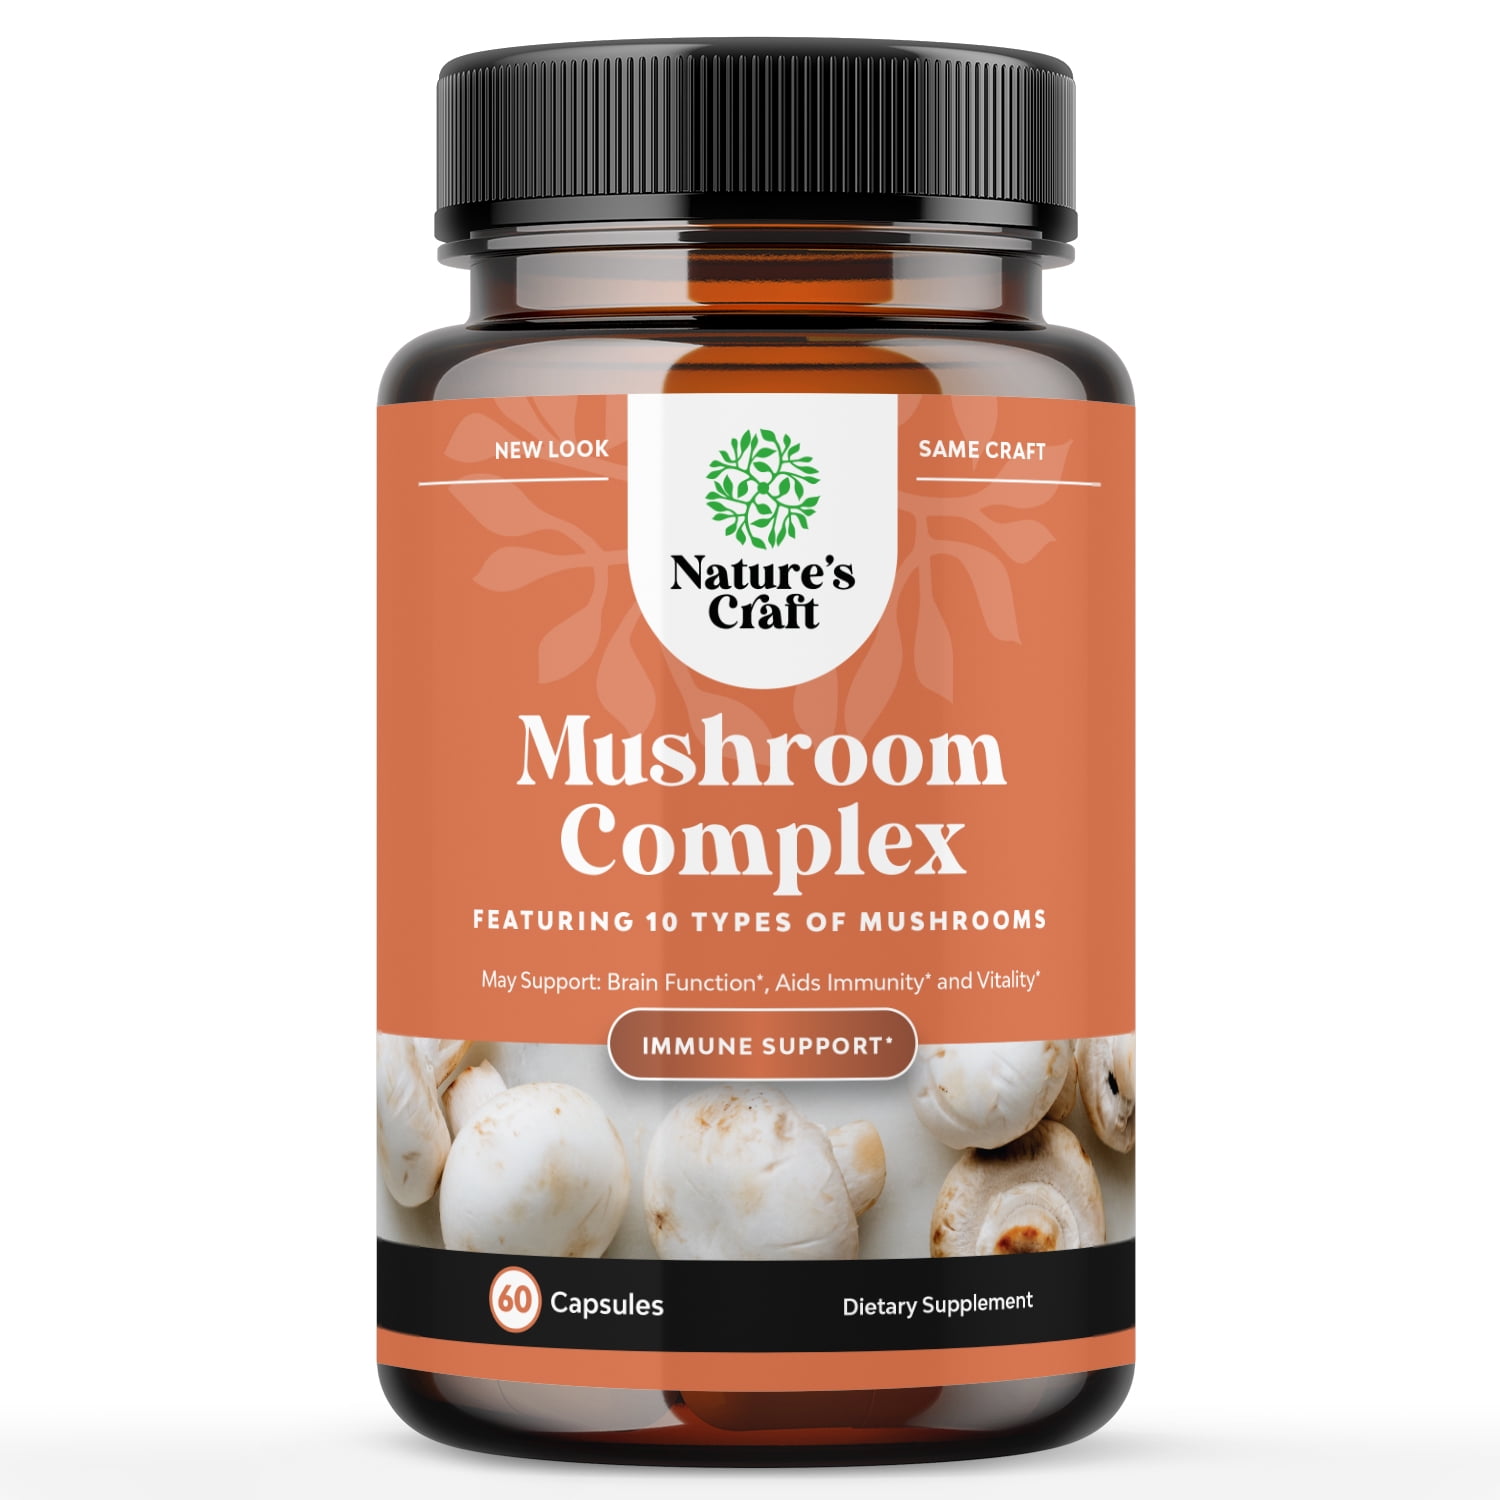 Nootropic Brain Focus Mushroom Supplement - Lions Mane Mushroom Complex and Reishi Mushroom Immune Support Adaptogen Blend - Walmart.com